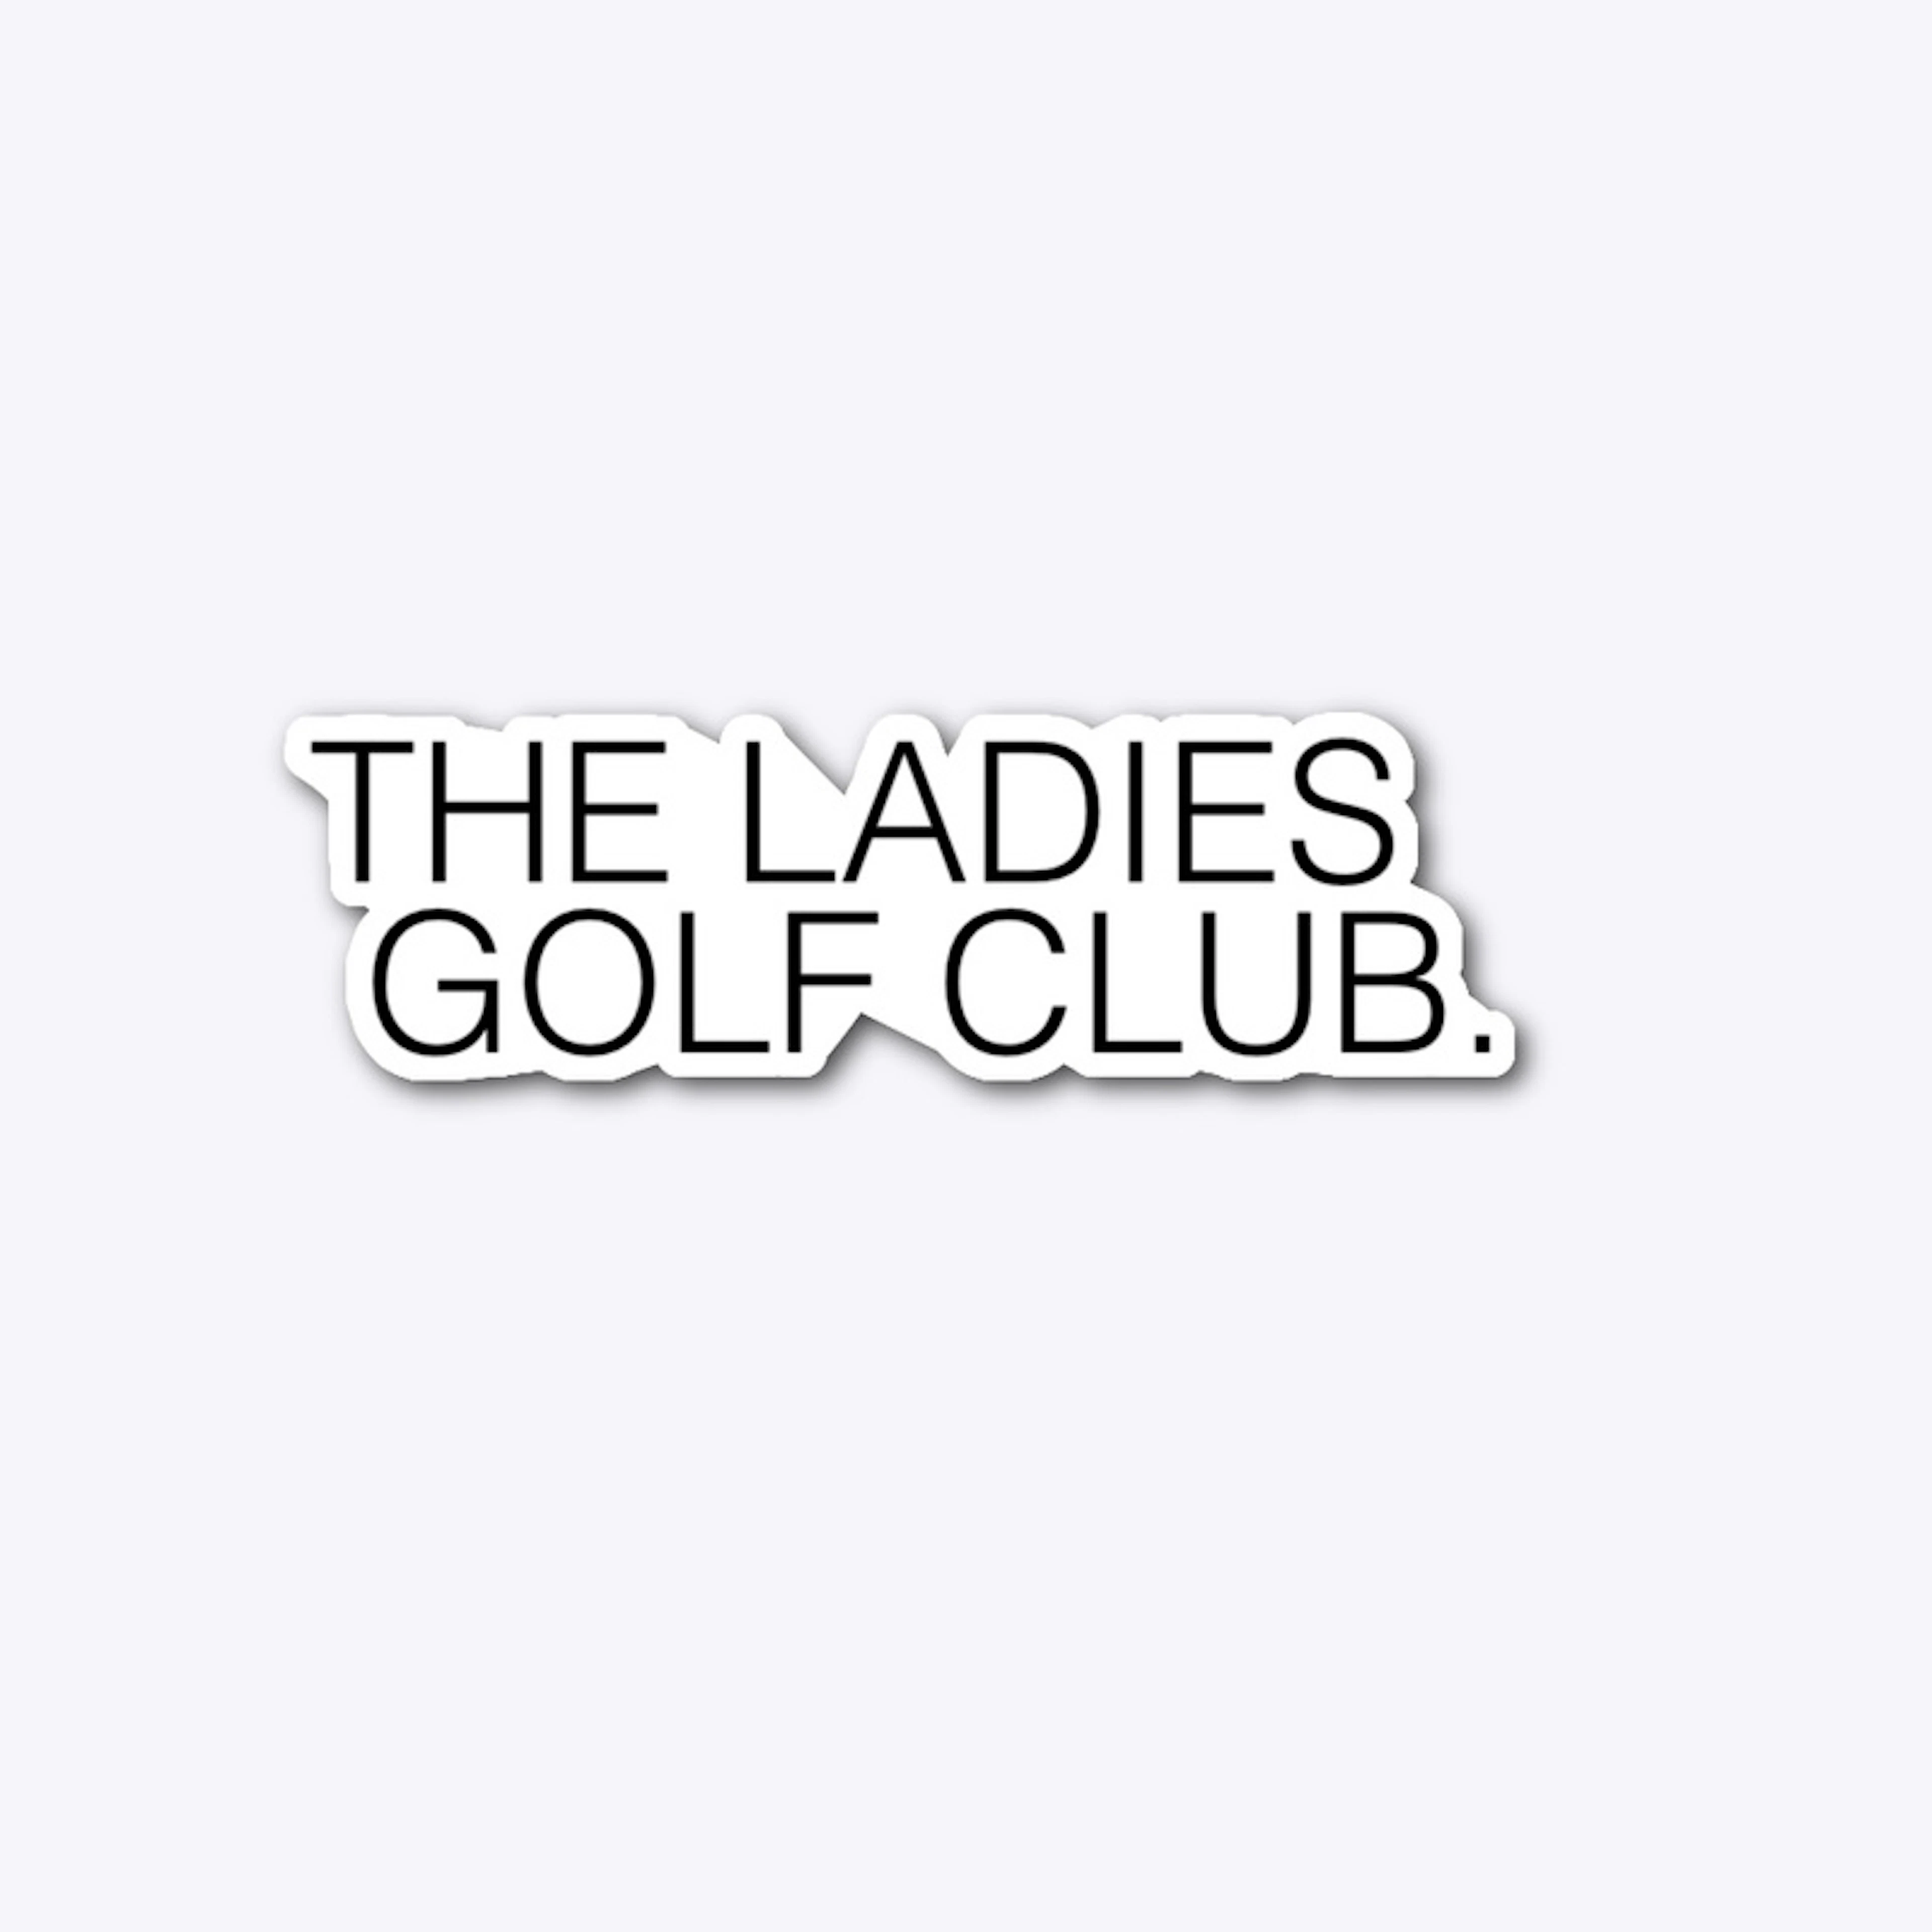 THE LADIES GOLF CLUB. 